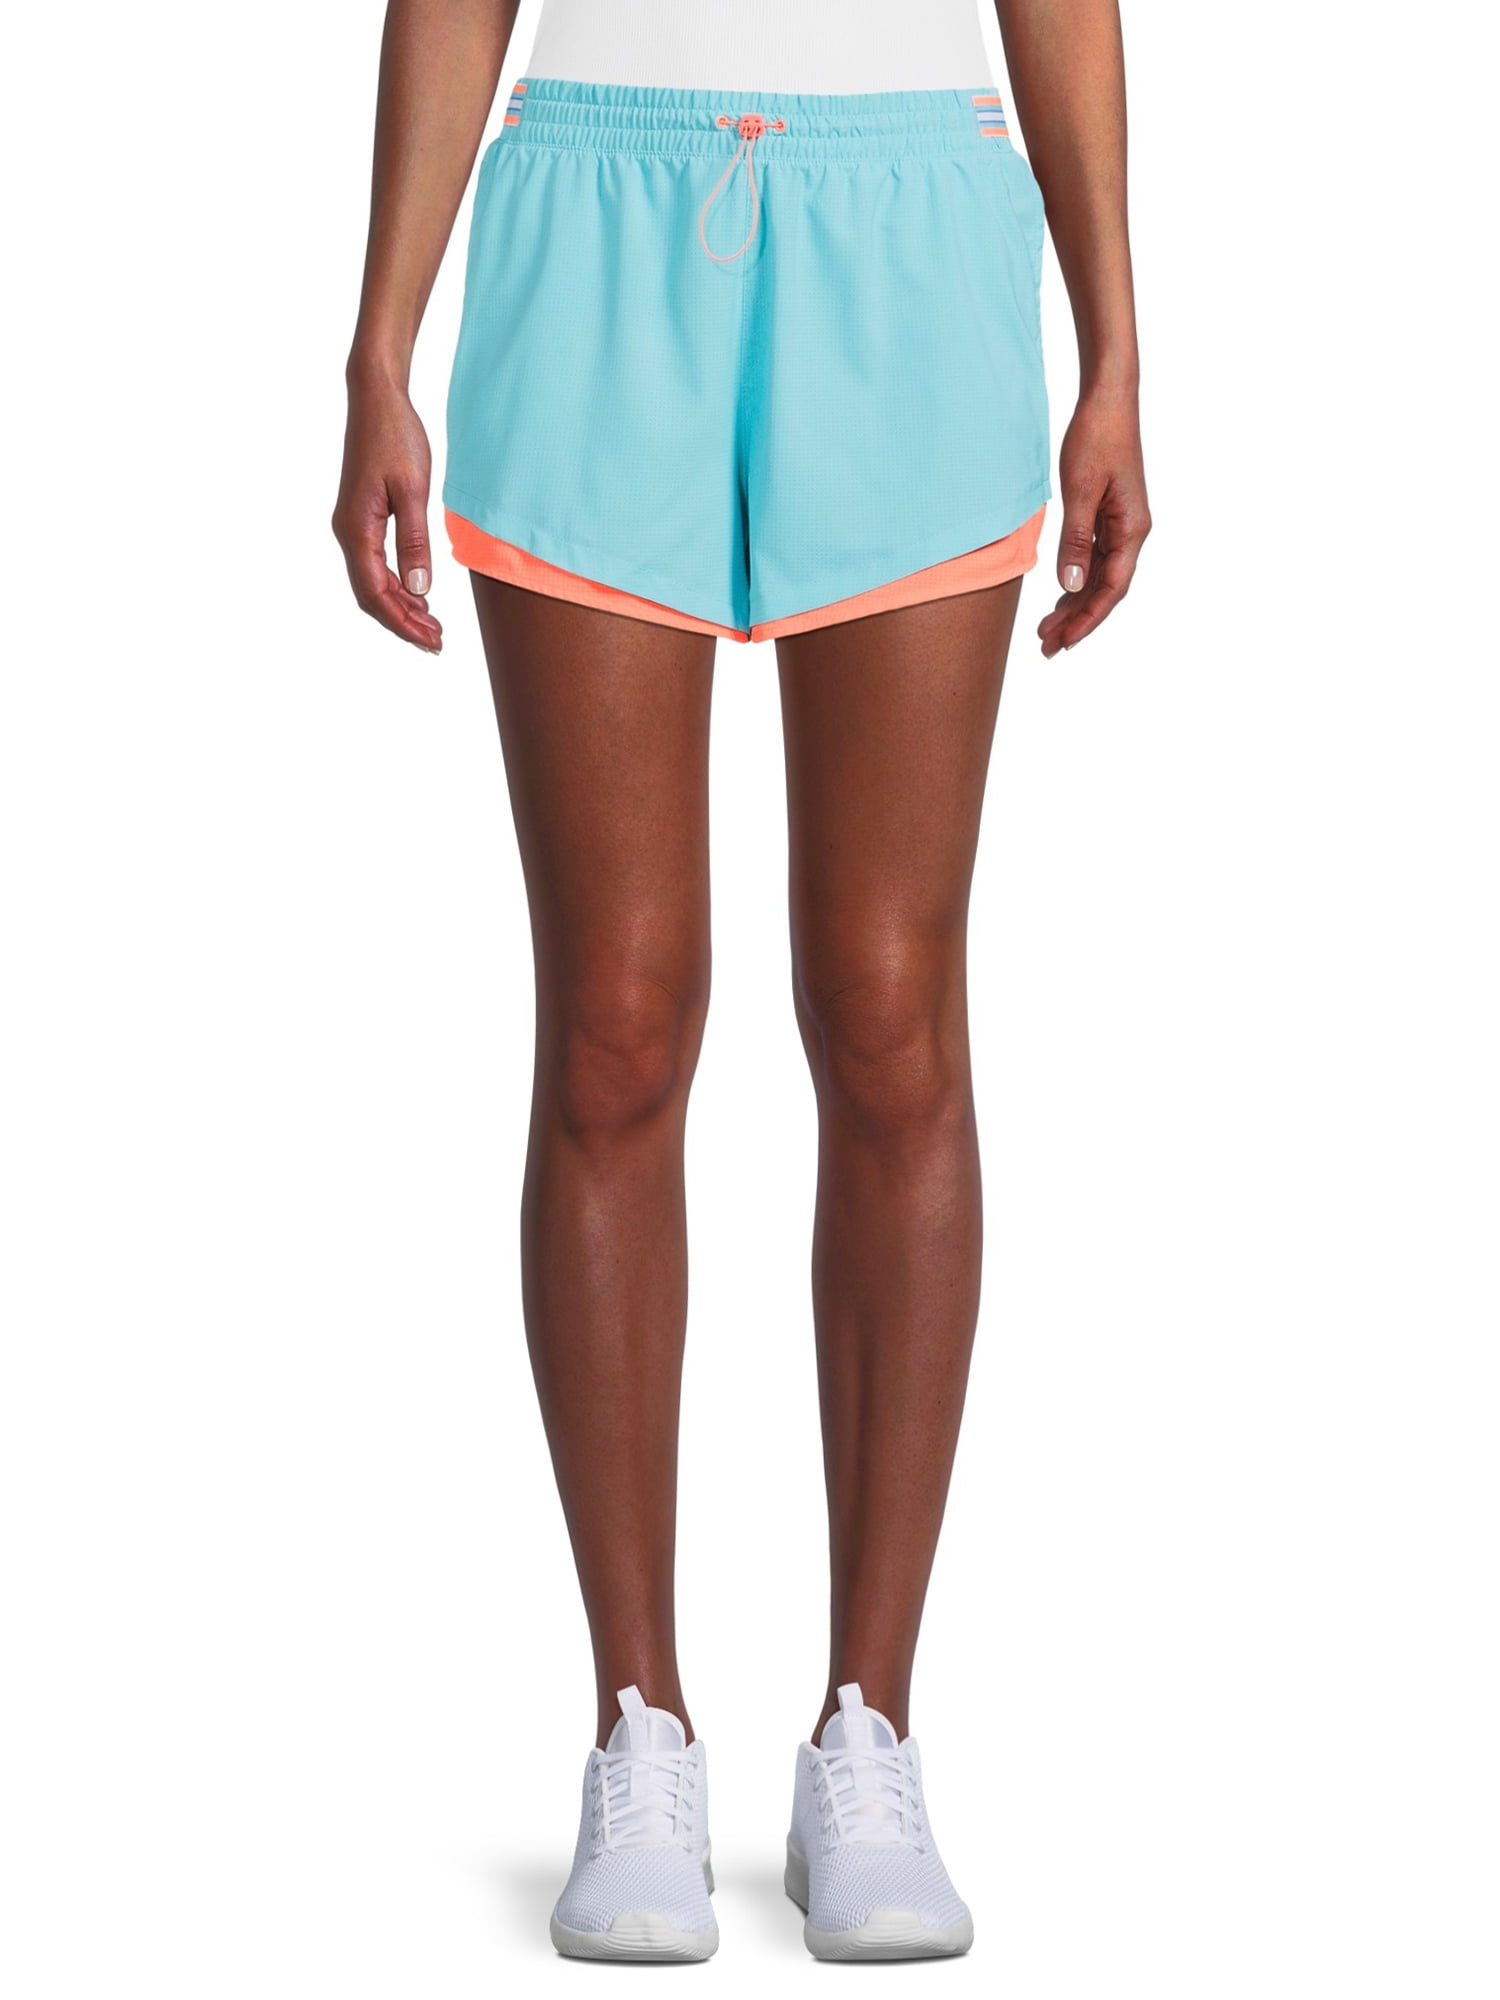 Avia Women's Active Running Shorts - Walmart.com